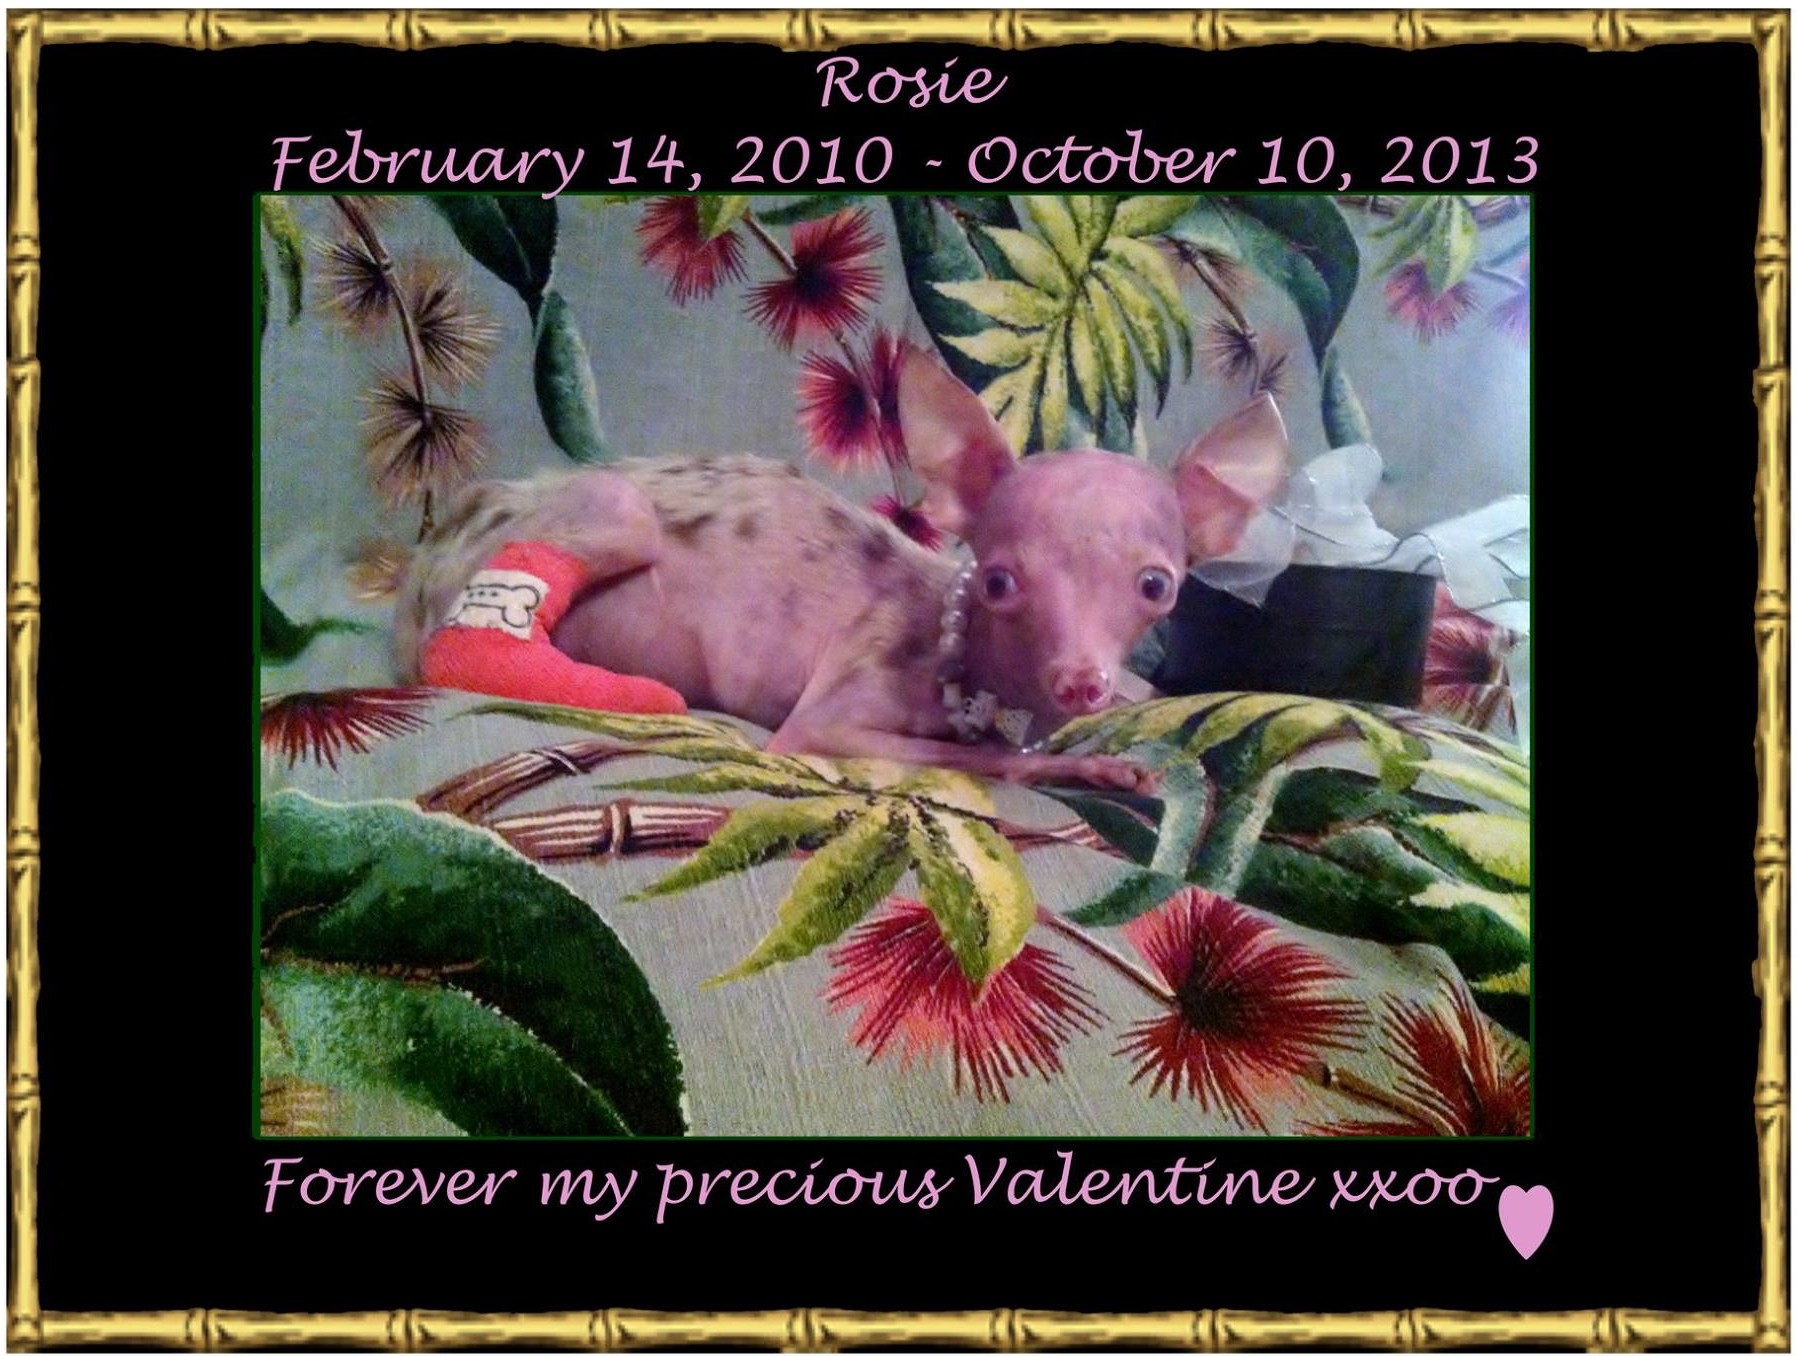 Happy Birthday Rosie - Forever my precious Valentine